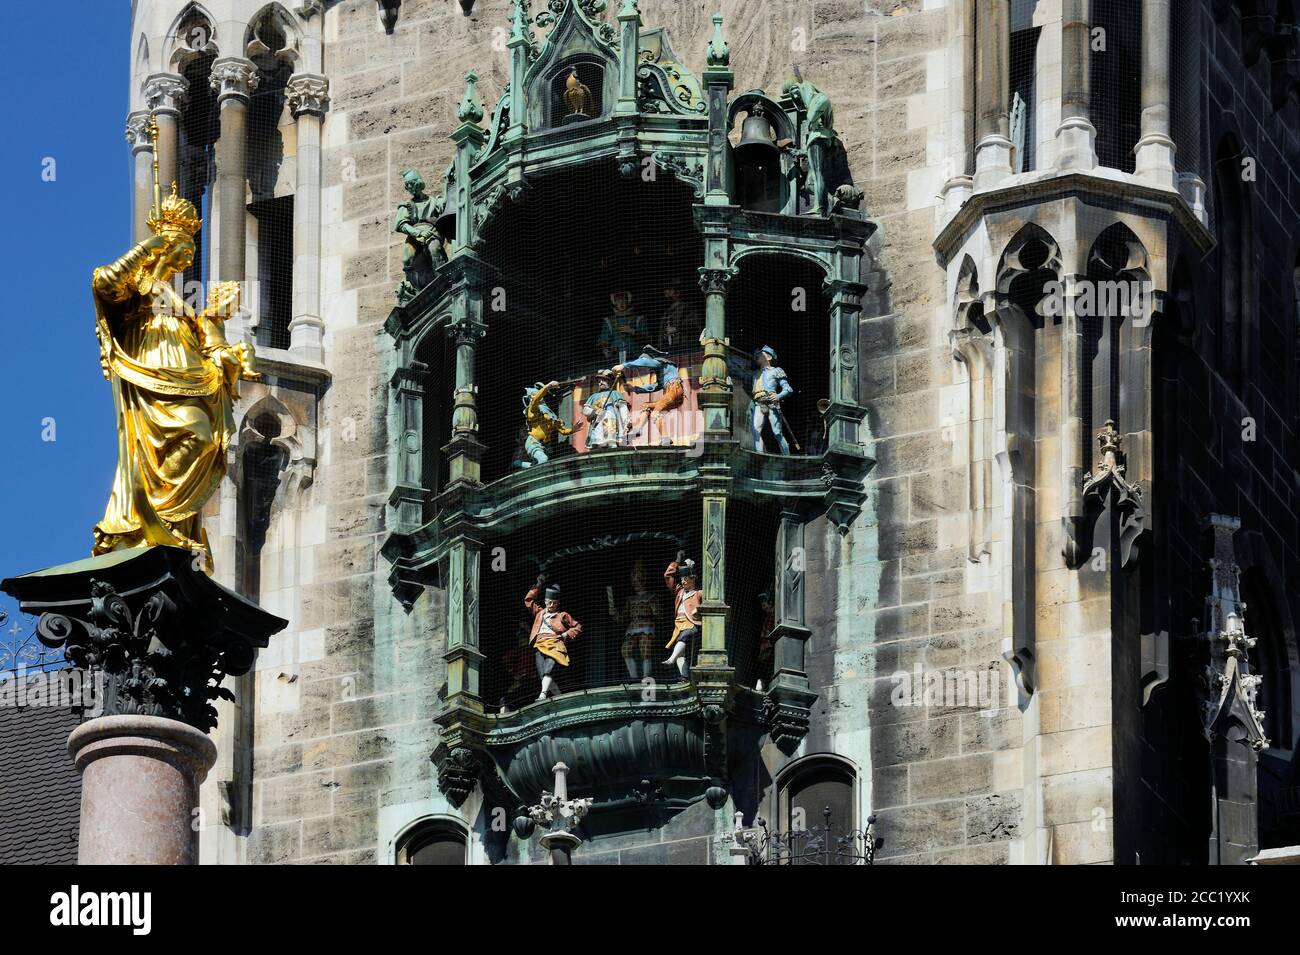 Germany, Bavaria, Munich, Statue of virgin mary and Glockenspiel Clock Stock Photo